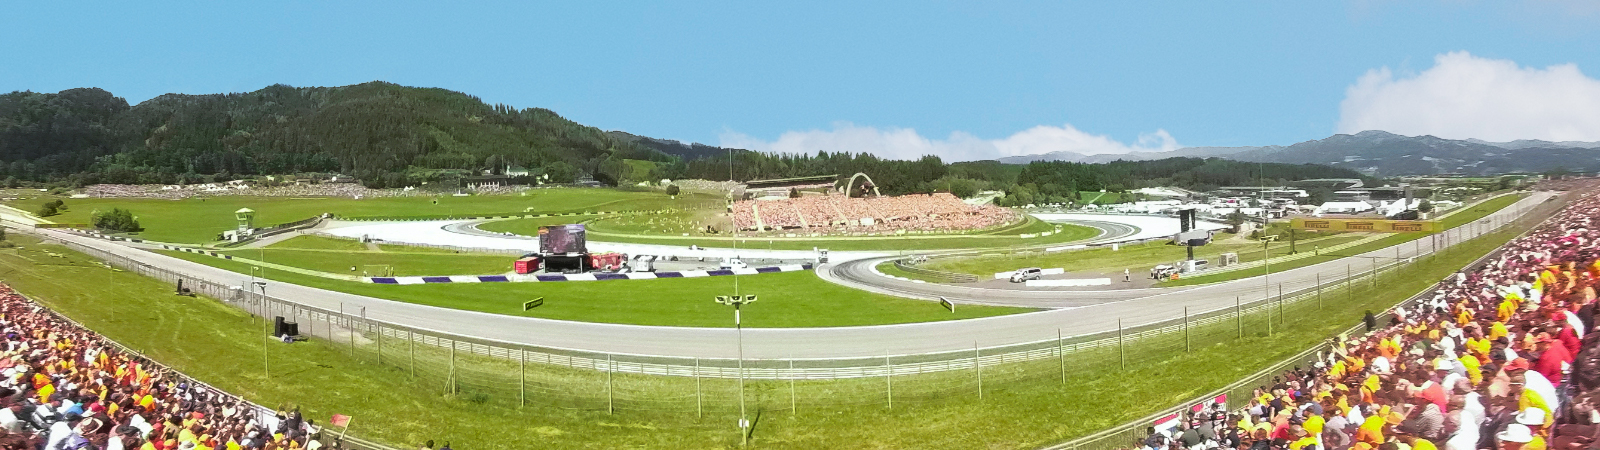 Vstupenka 3 Corner Steiermark | F1 Rakousko 2023 | Red Bull Ring | Spielberg | Oficilání vstupenky | www.F1austria.com